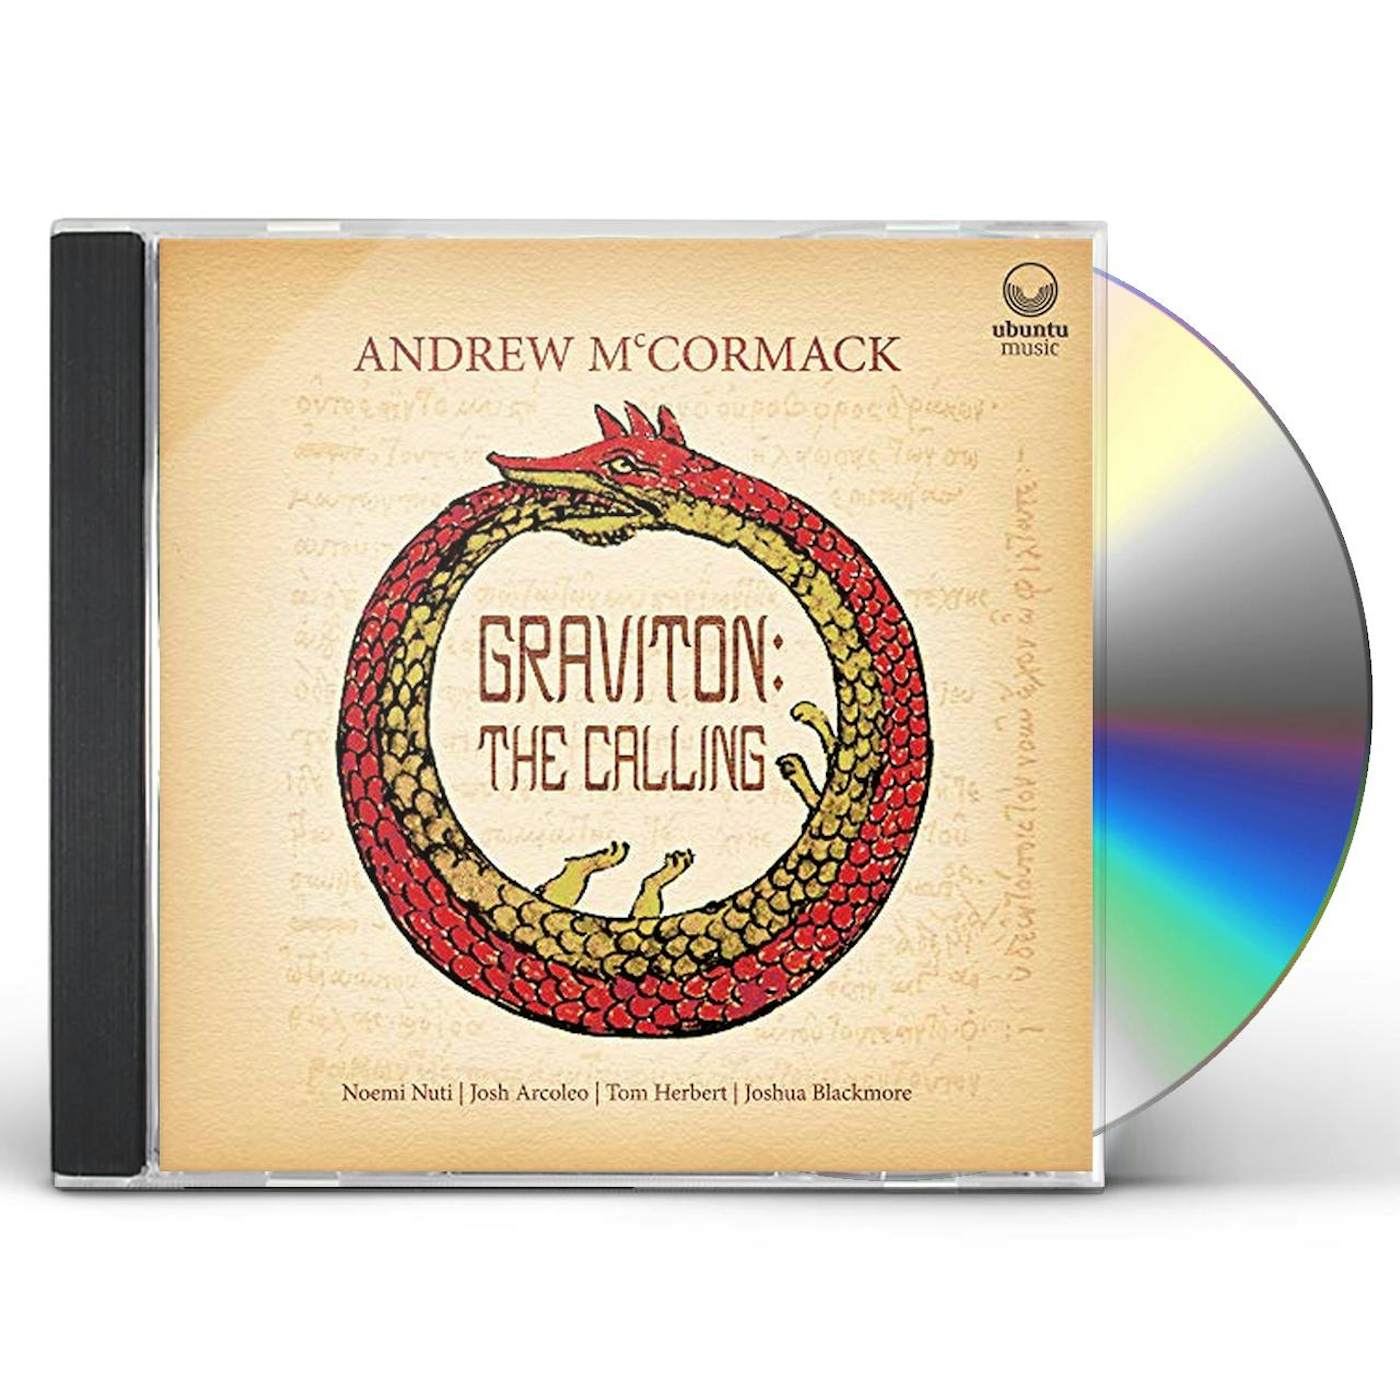 Andrew McCormack GRAVITON: THE CALLING CD